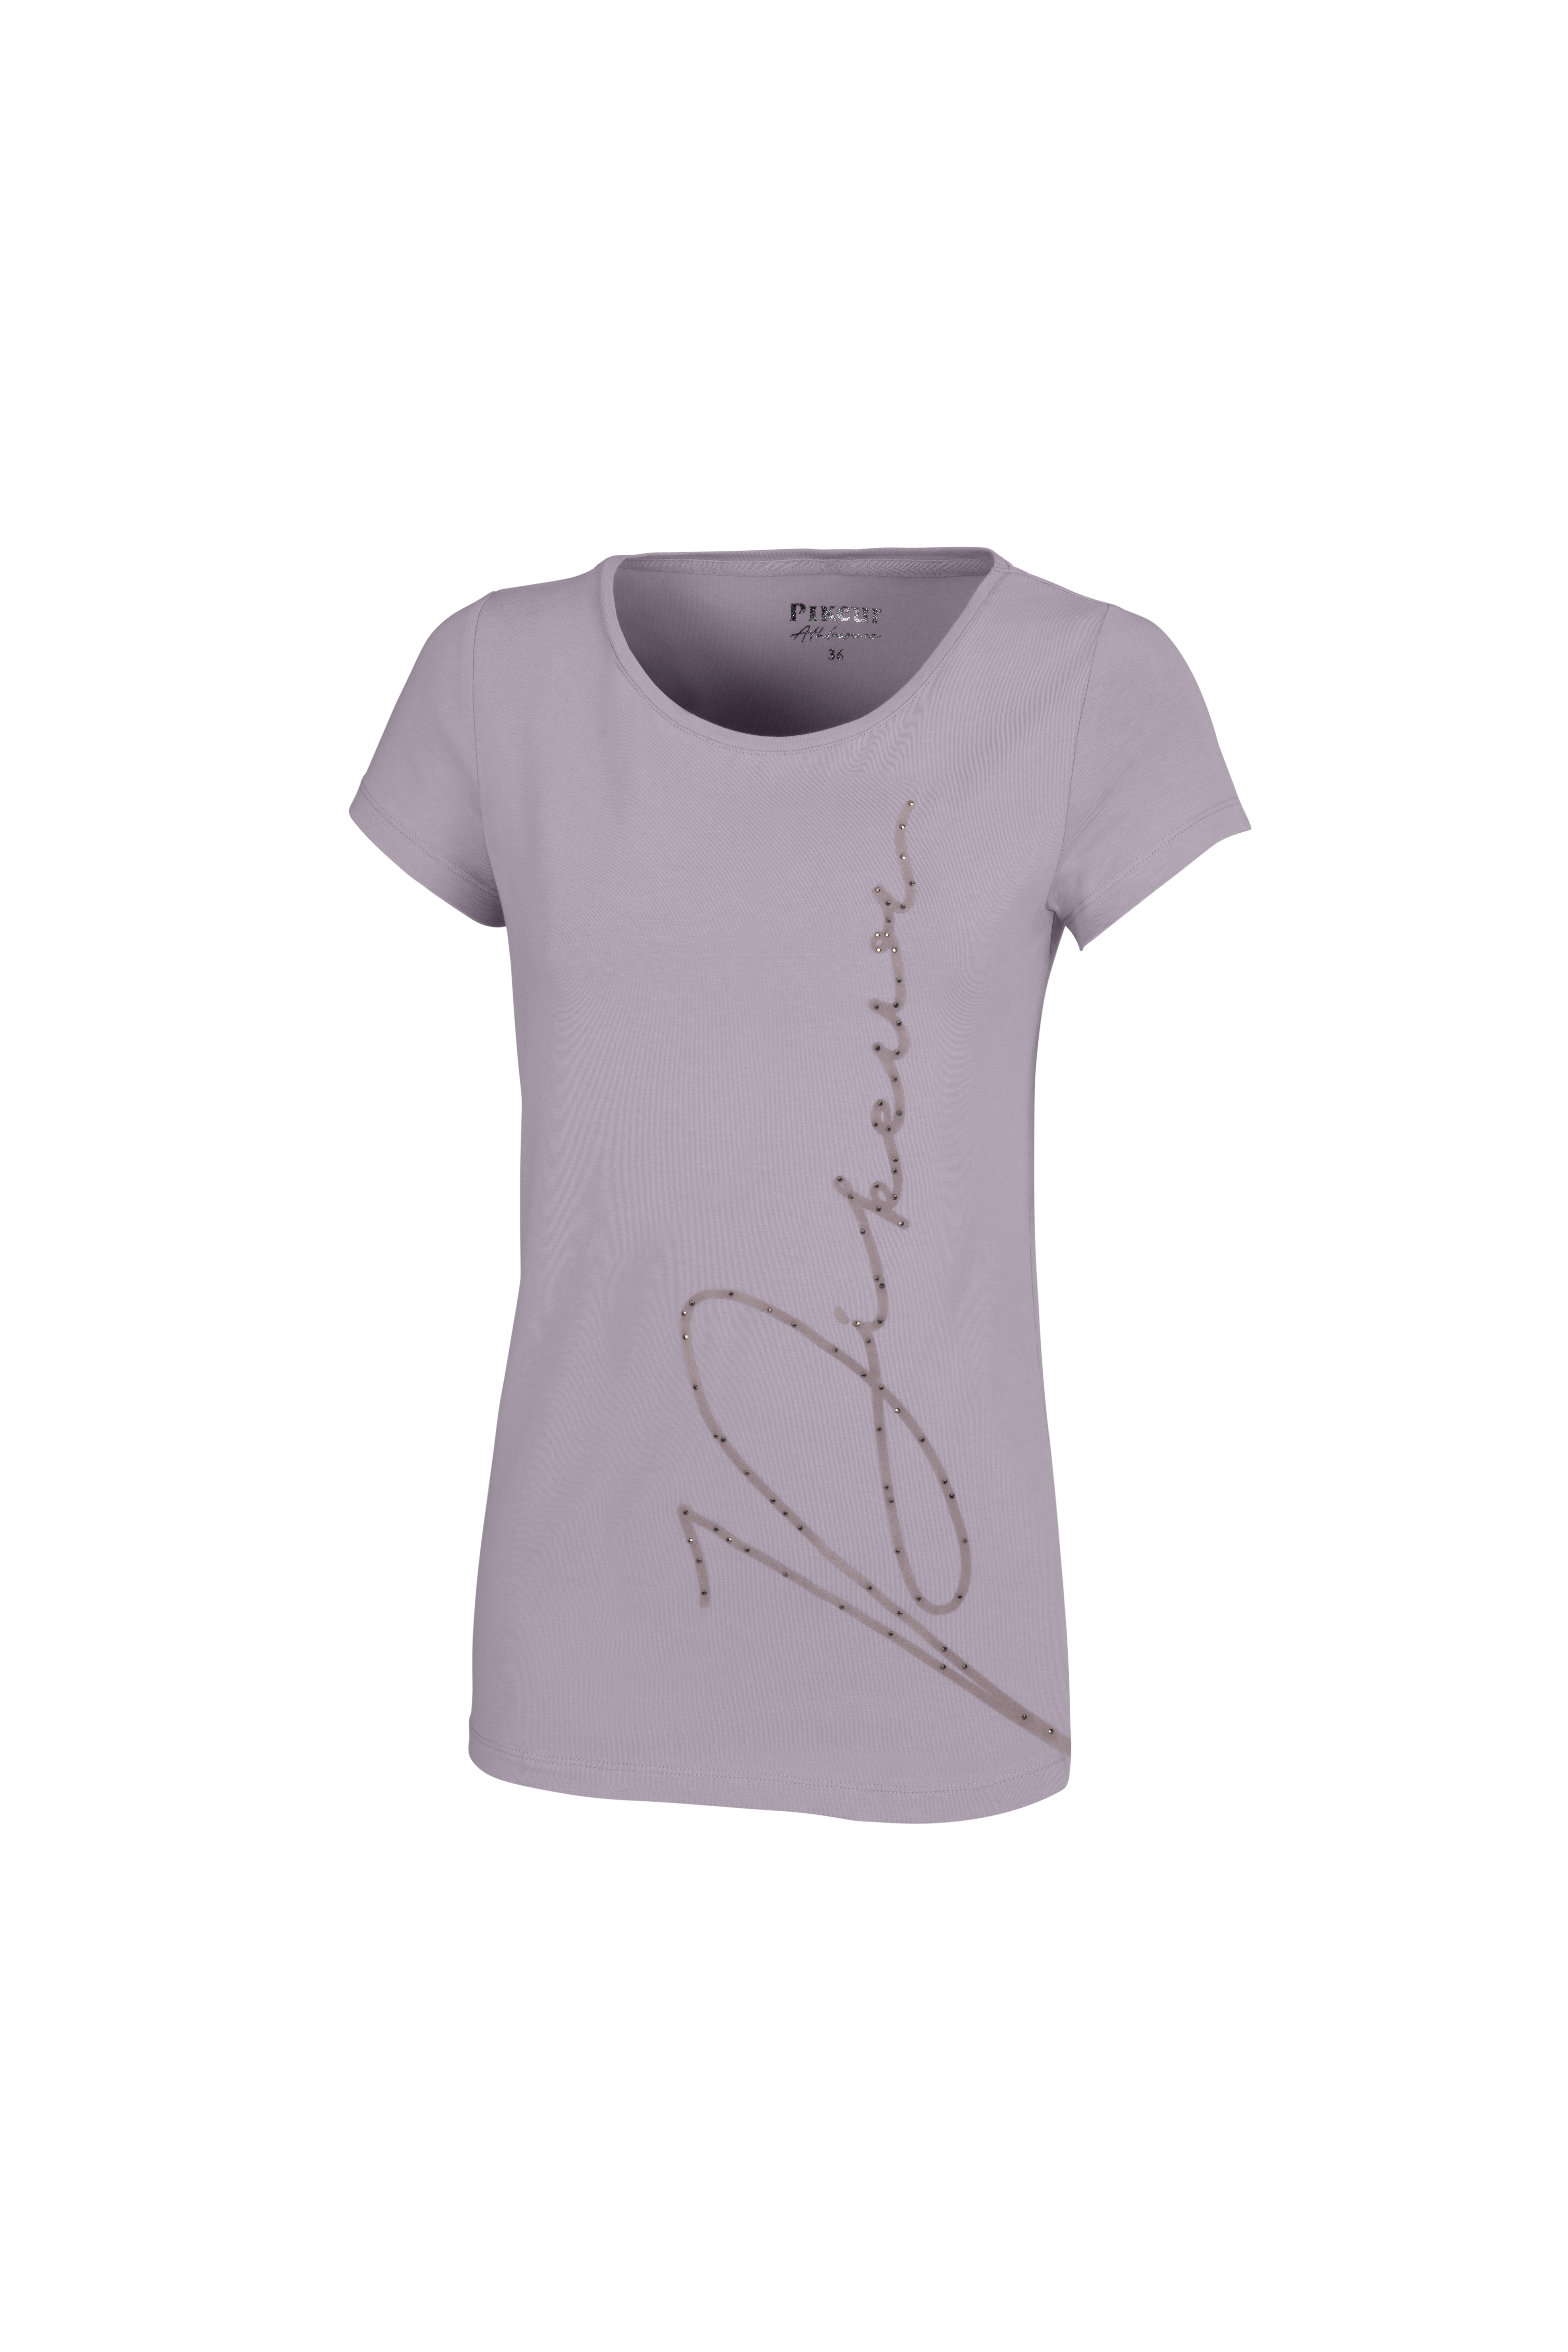 Shirt PARY, Damen, Selection 22, silk purple